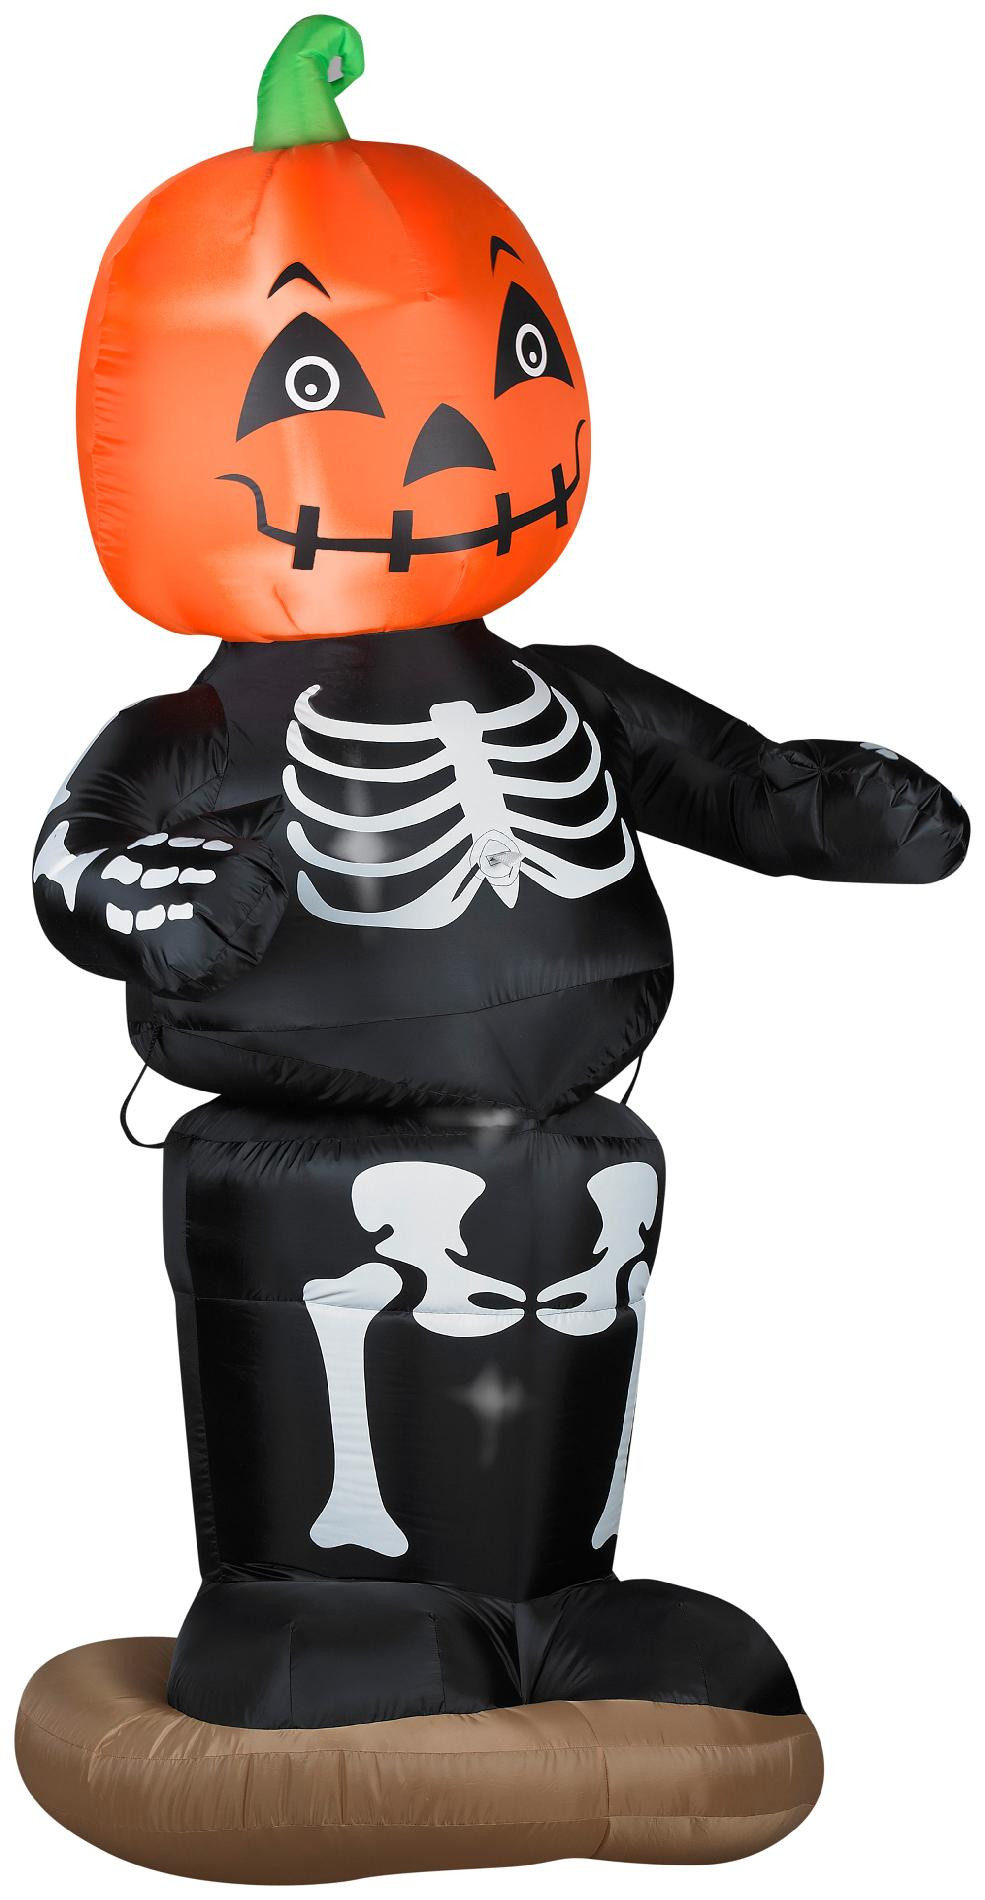 Outdoor Animated Halloween Decorations
 Airblown Inflatables Airblown Inflatable Halloween Outdoor